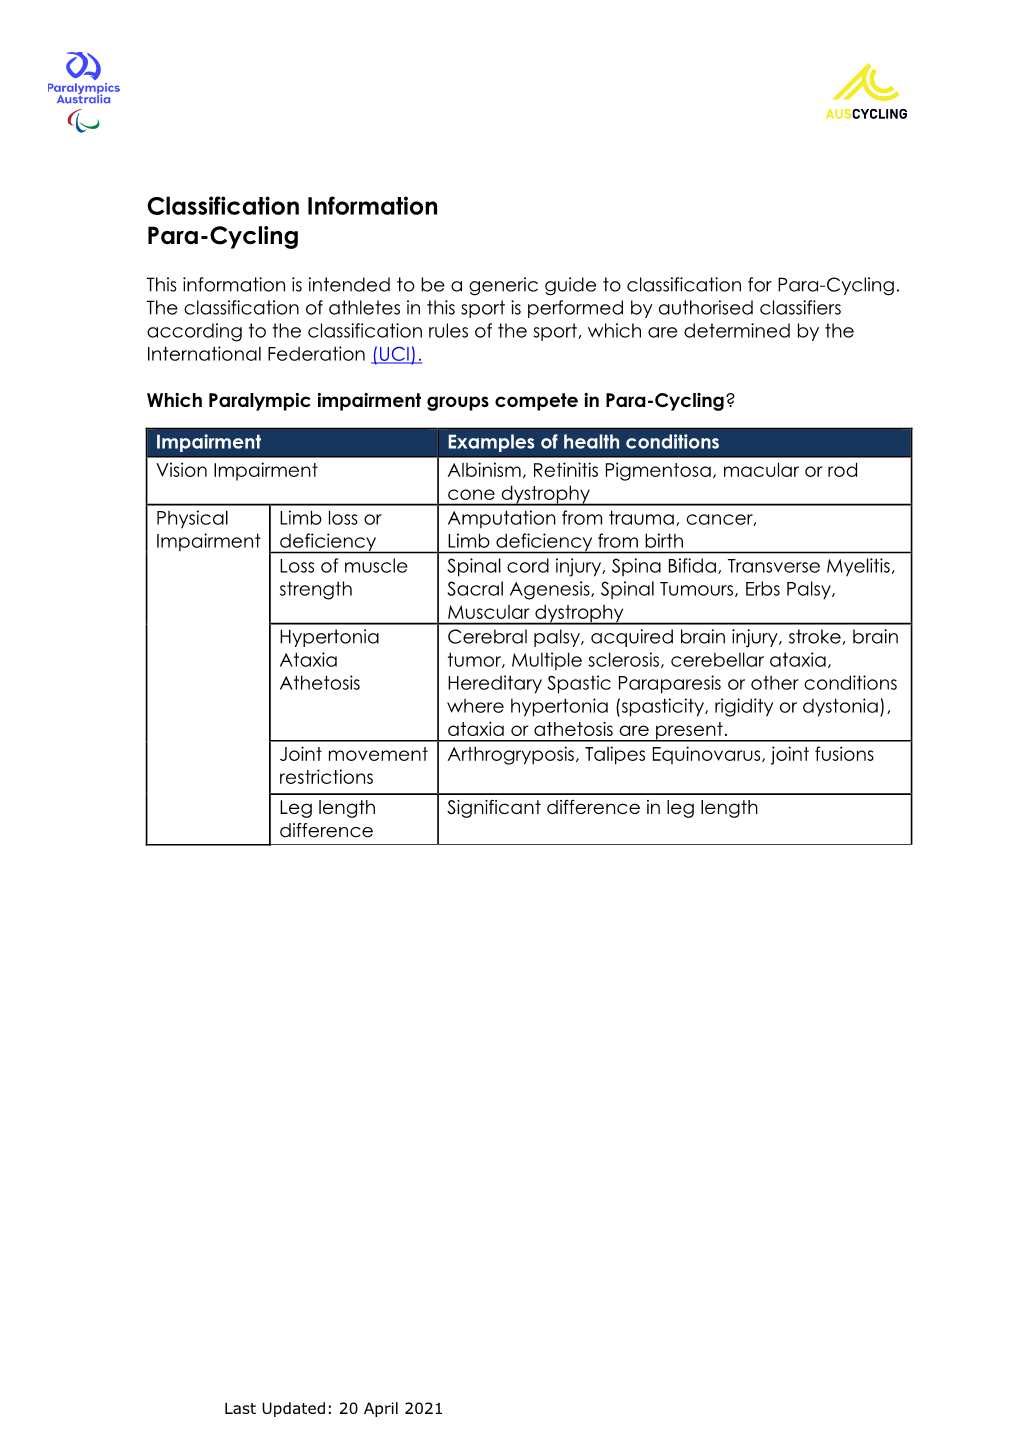 Classification Information Para-Cycling